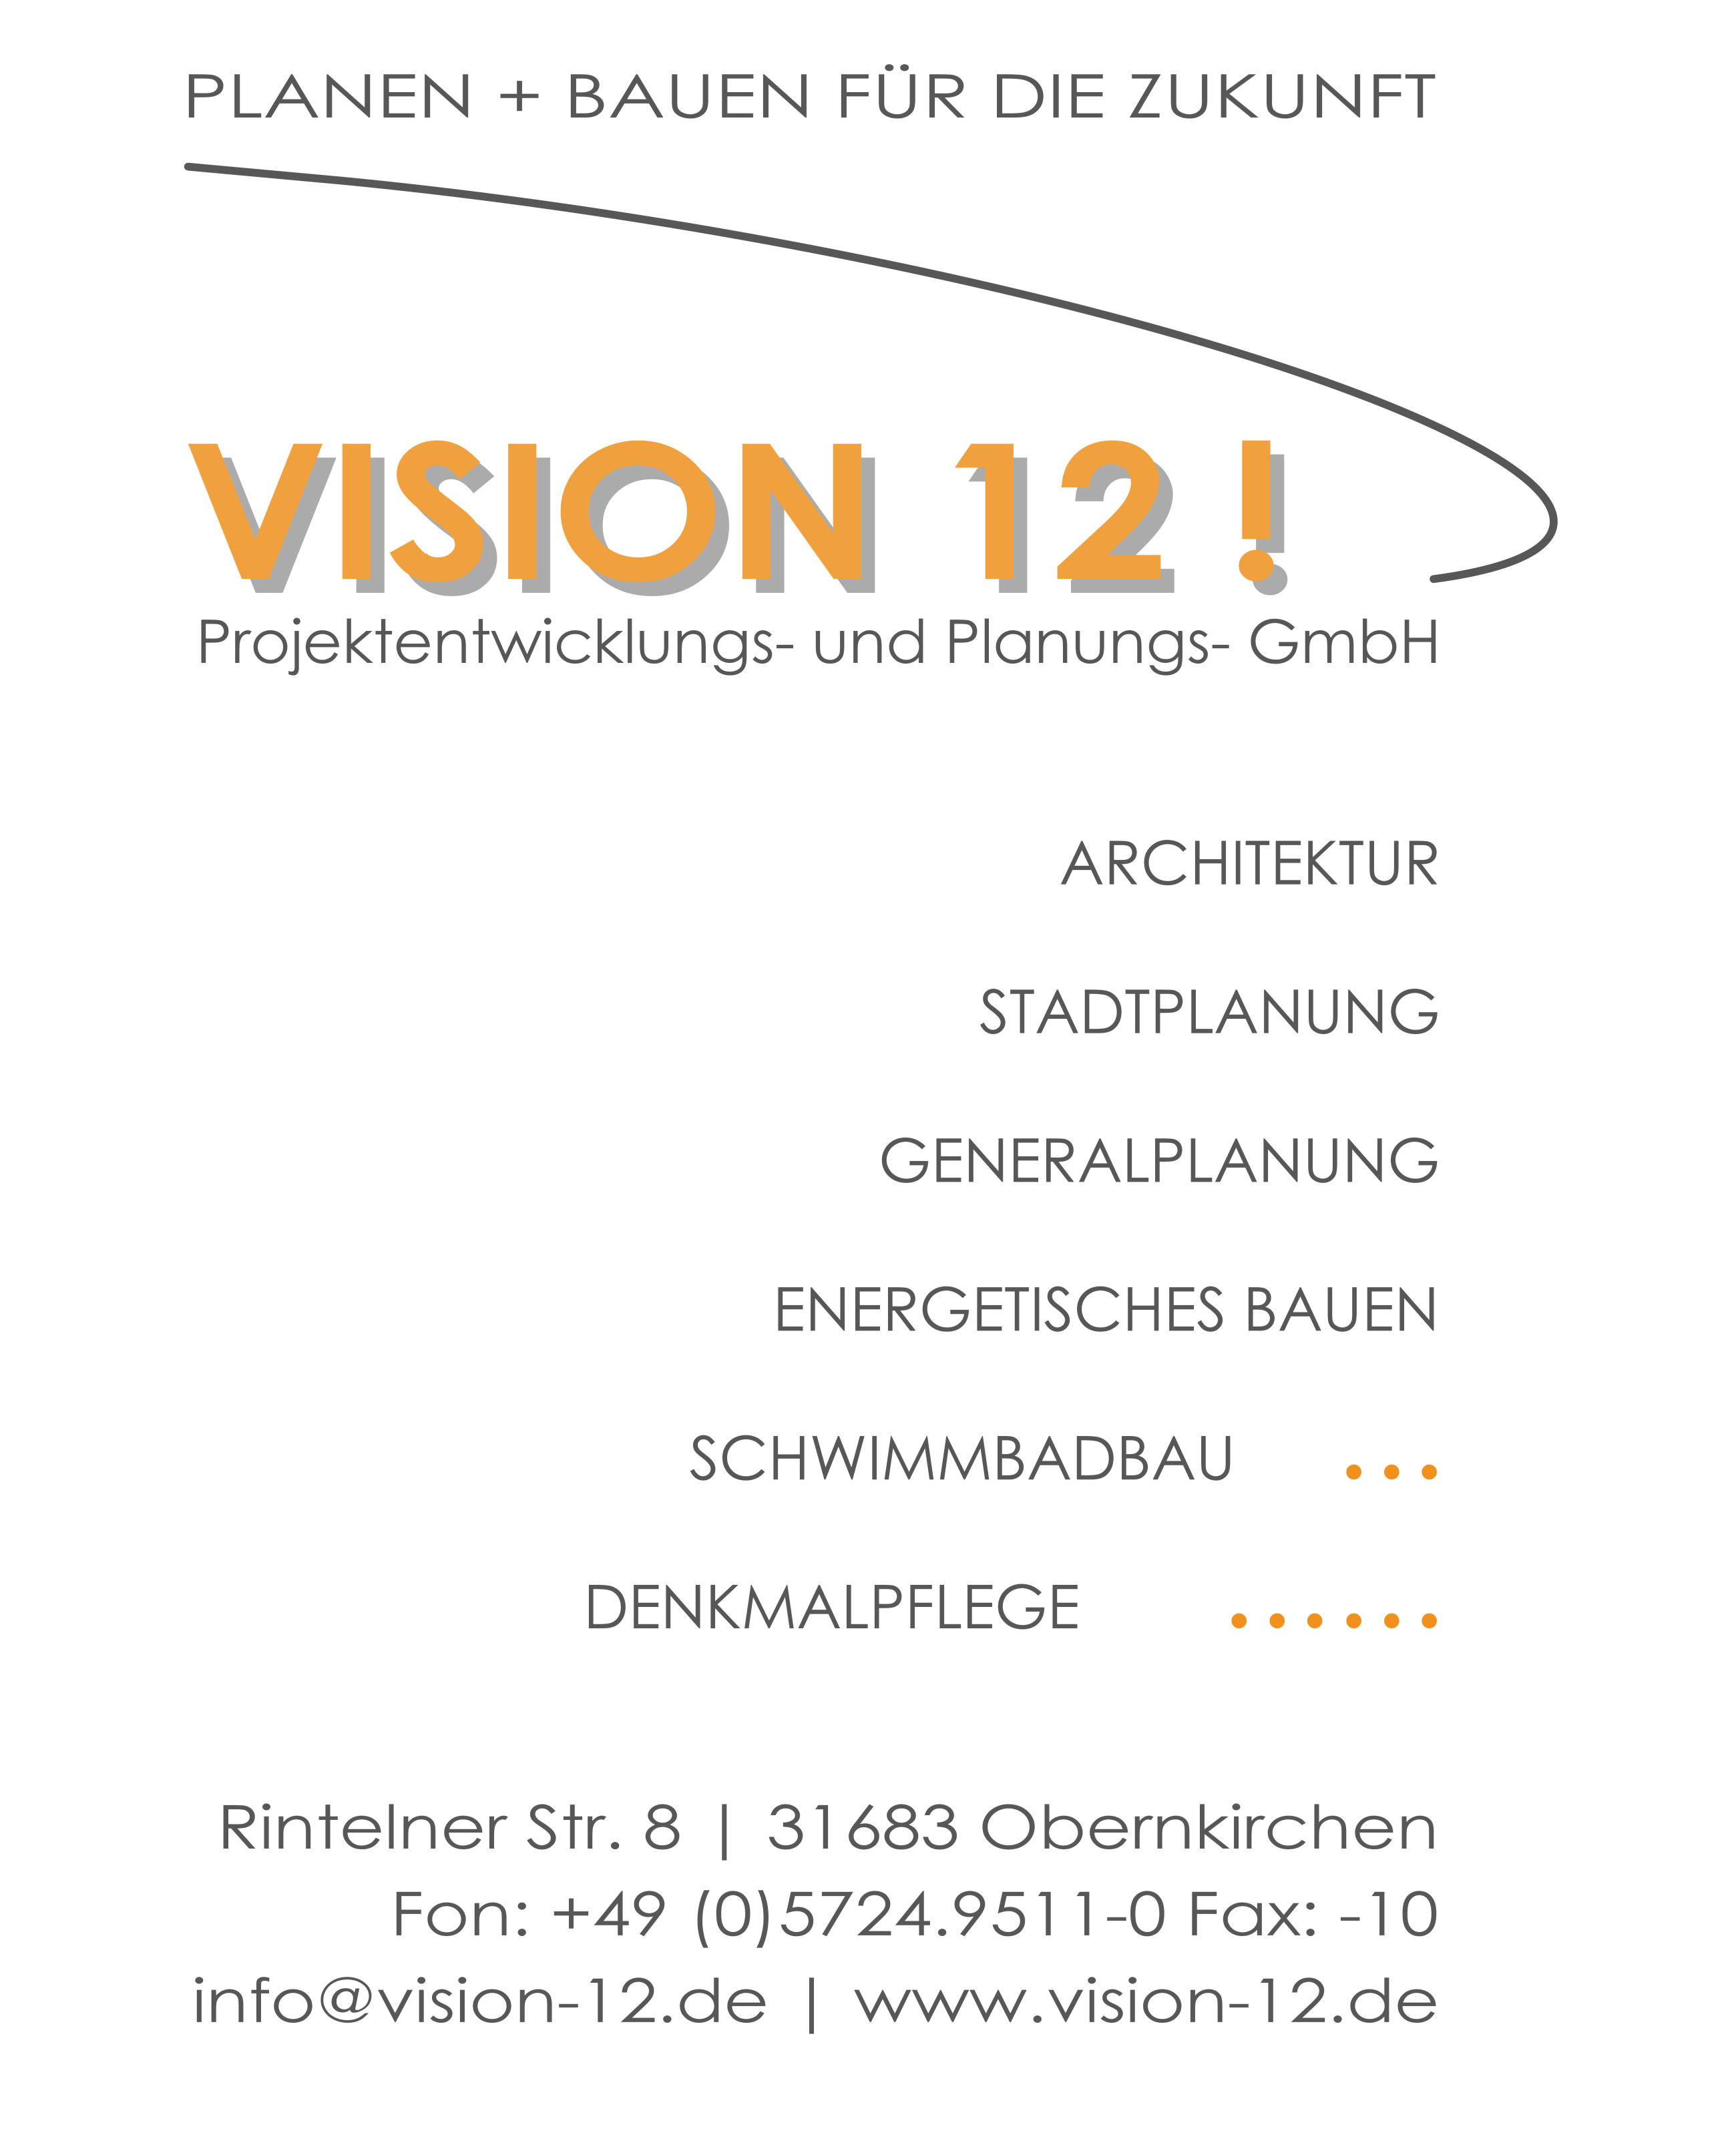 VISION 12!